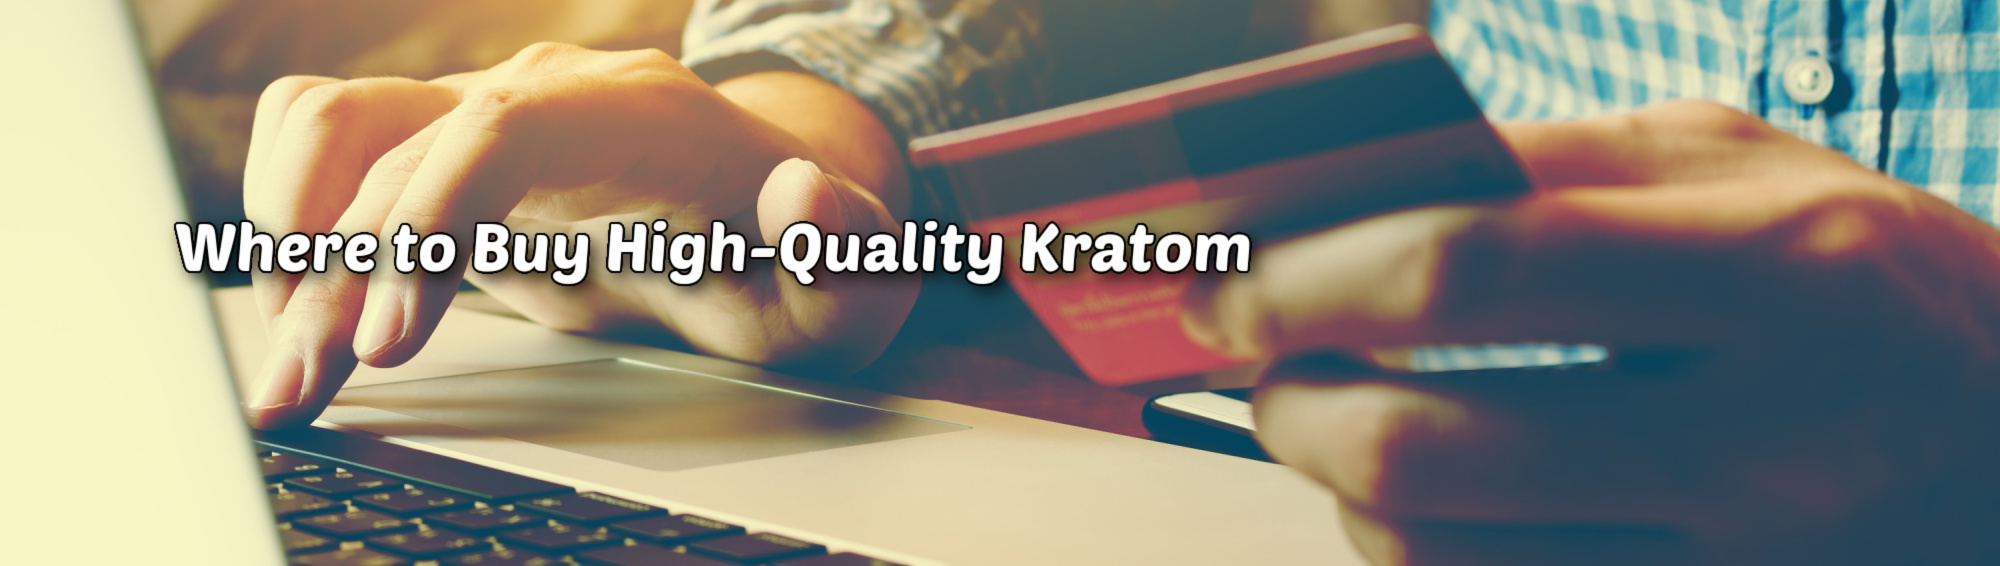 image of where to buy high quality kratom